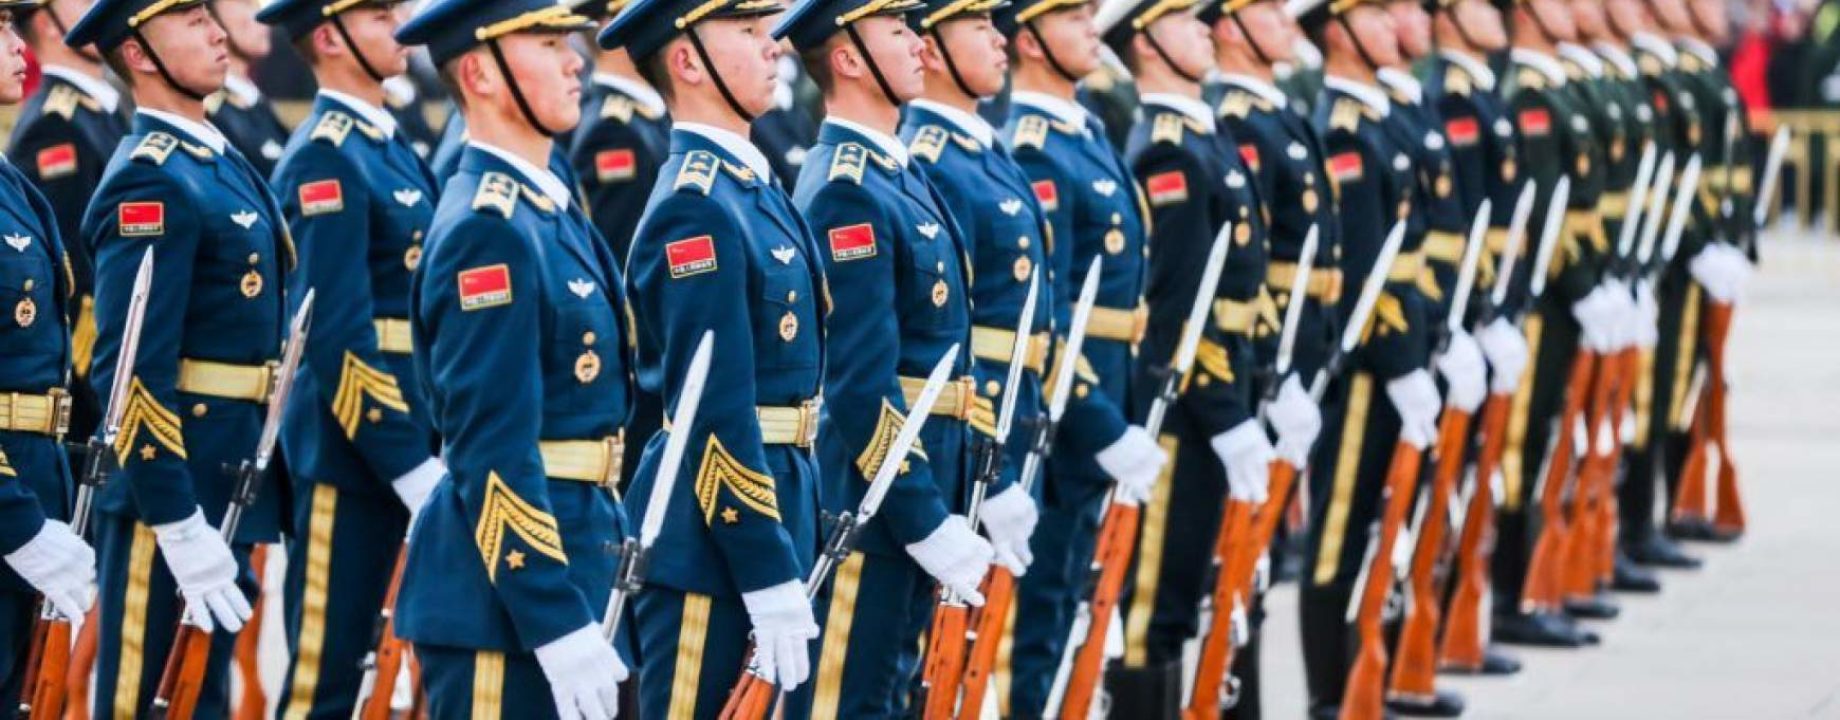 Kinai hadsereg